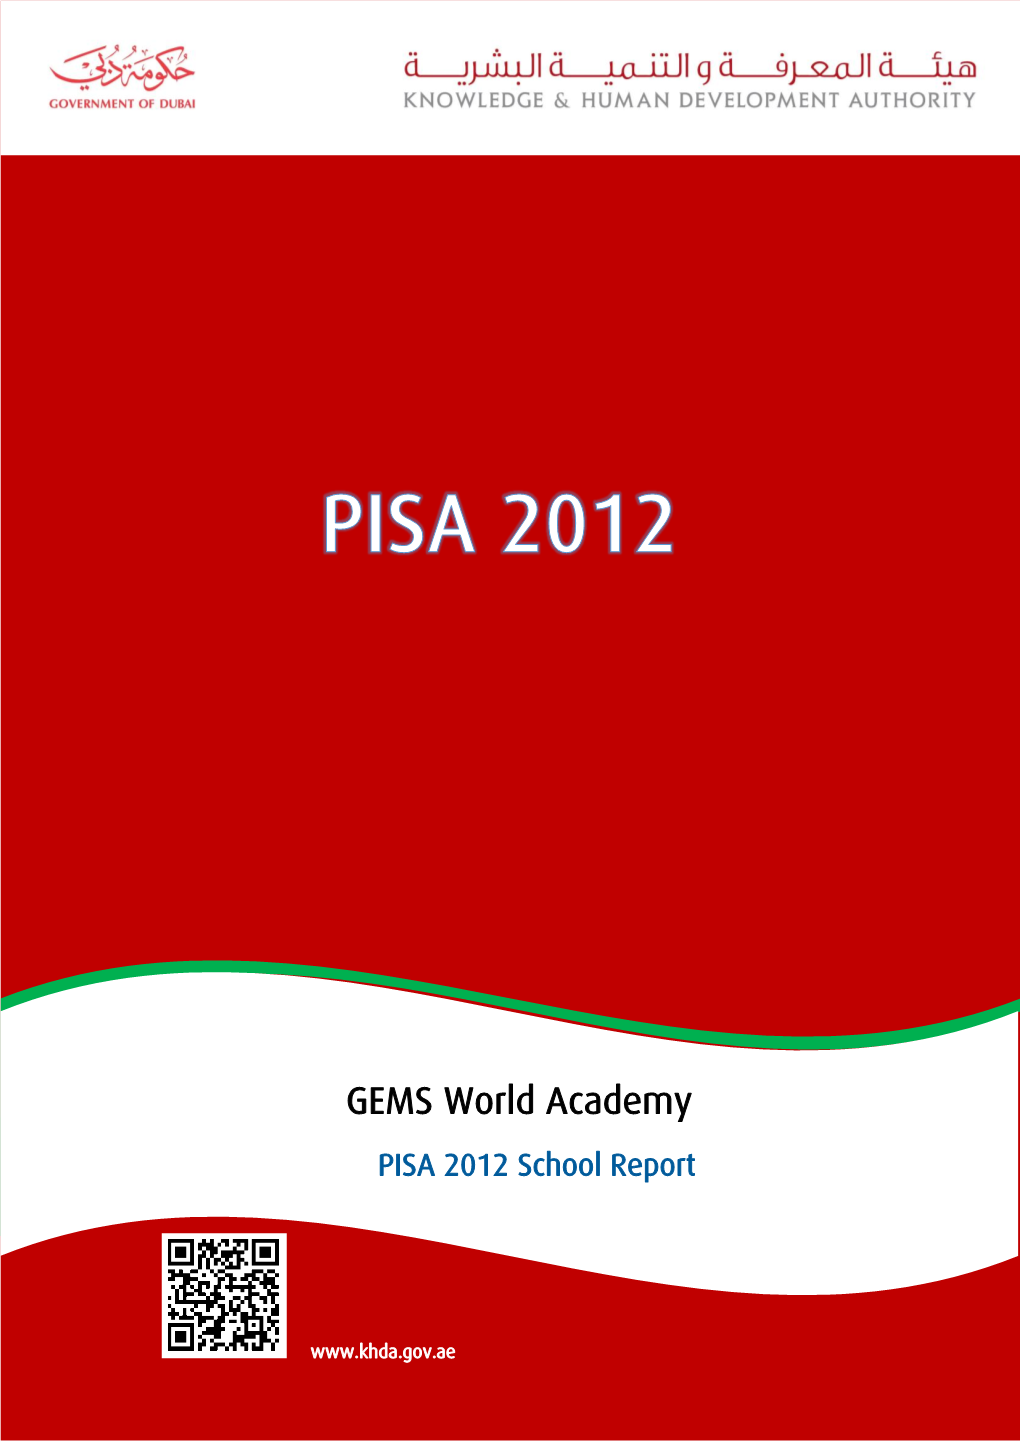 GEMS World Academy PISA 2012 School Report